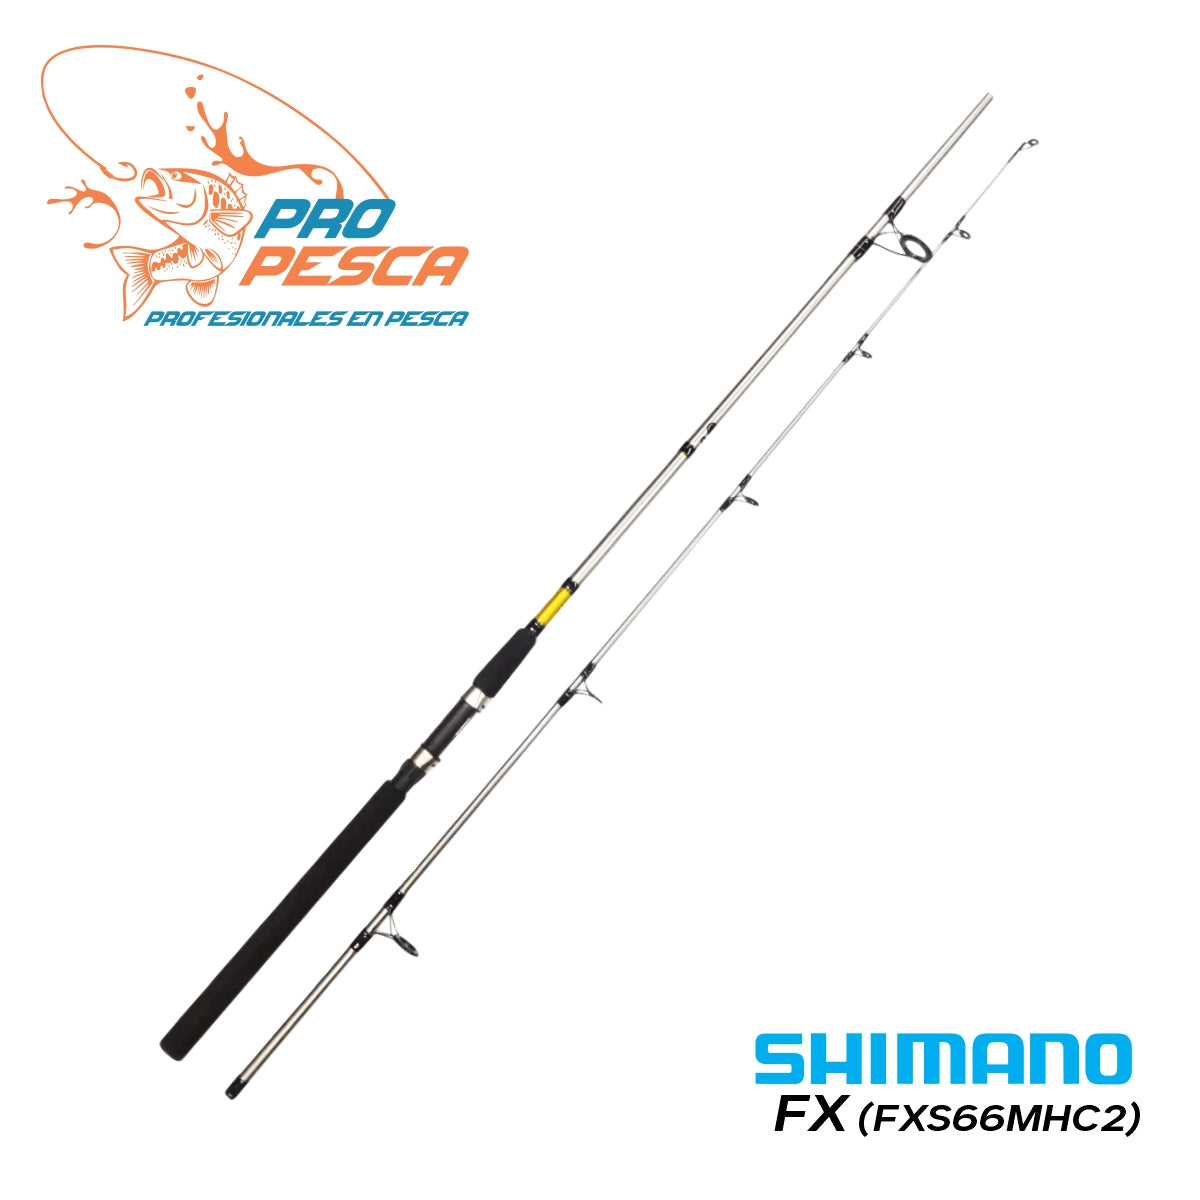 Caña de spinning SHIMANO FX® 1.98mtrs (FXS66MHC2) – Pro Pesca